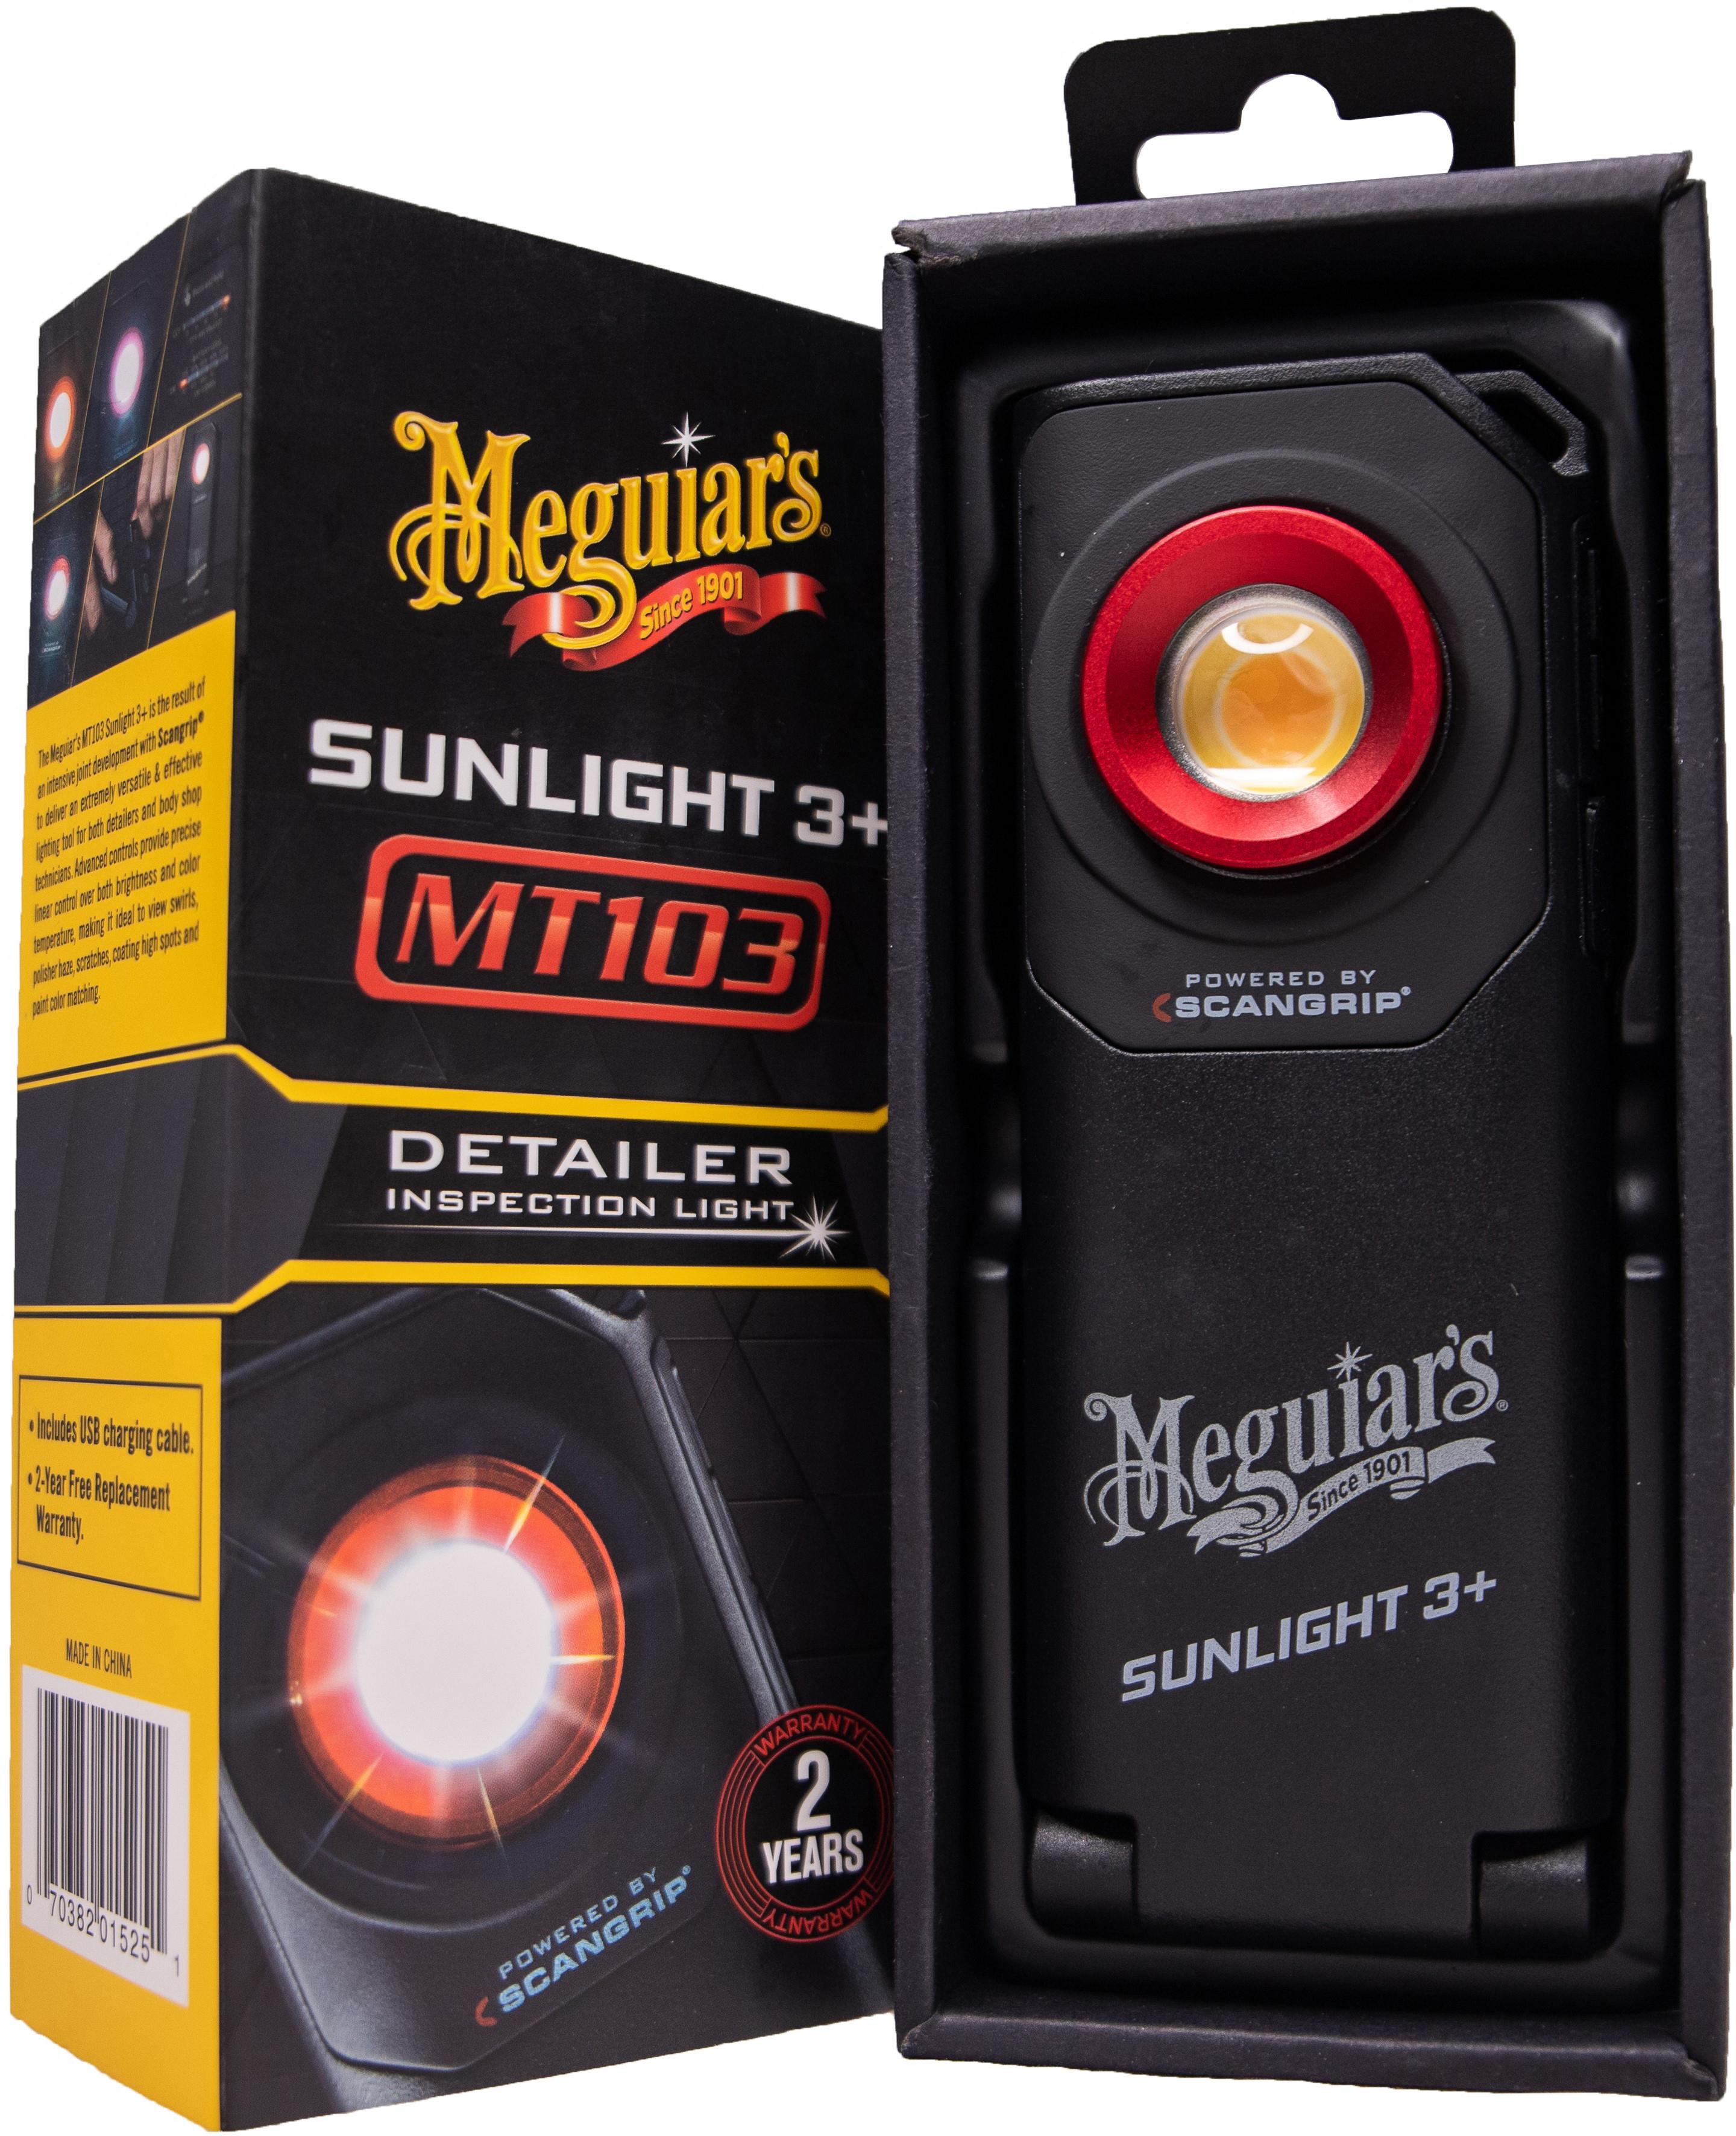 Meguiar's Sunlight 3+ Professional Paint Inspection Light